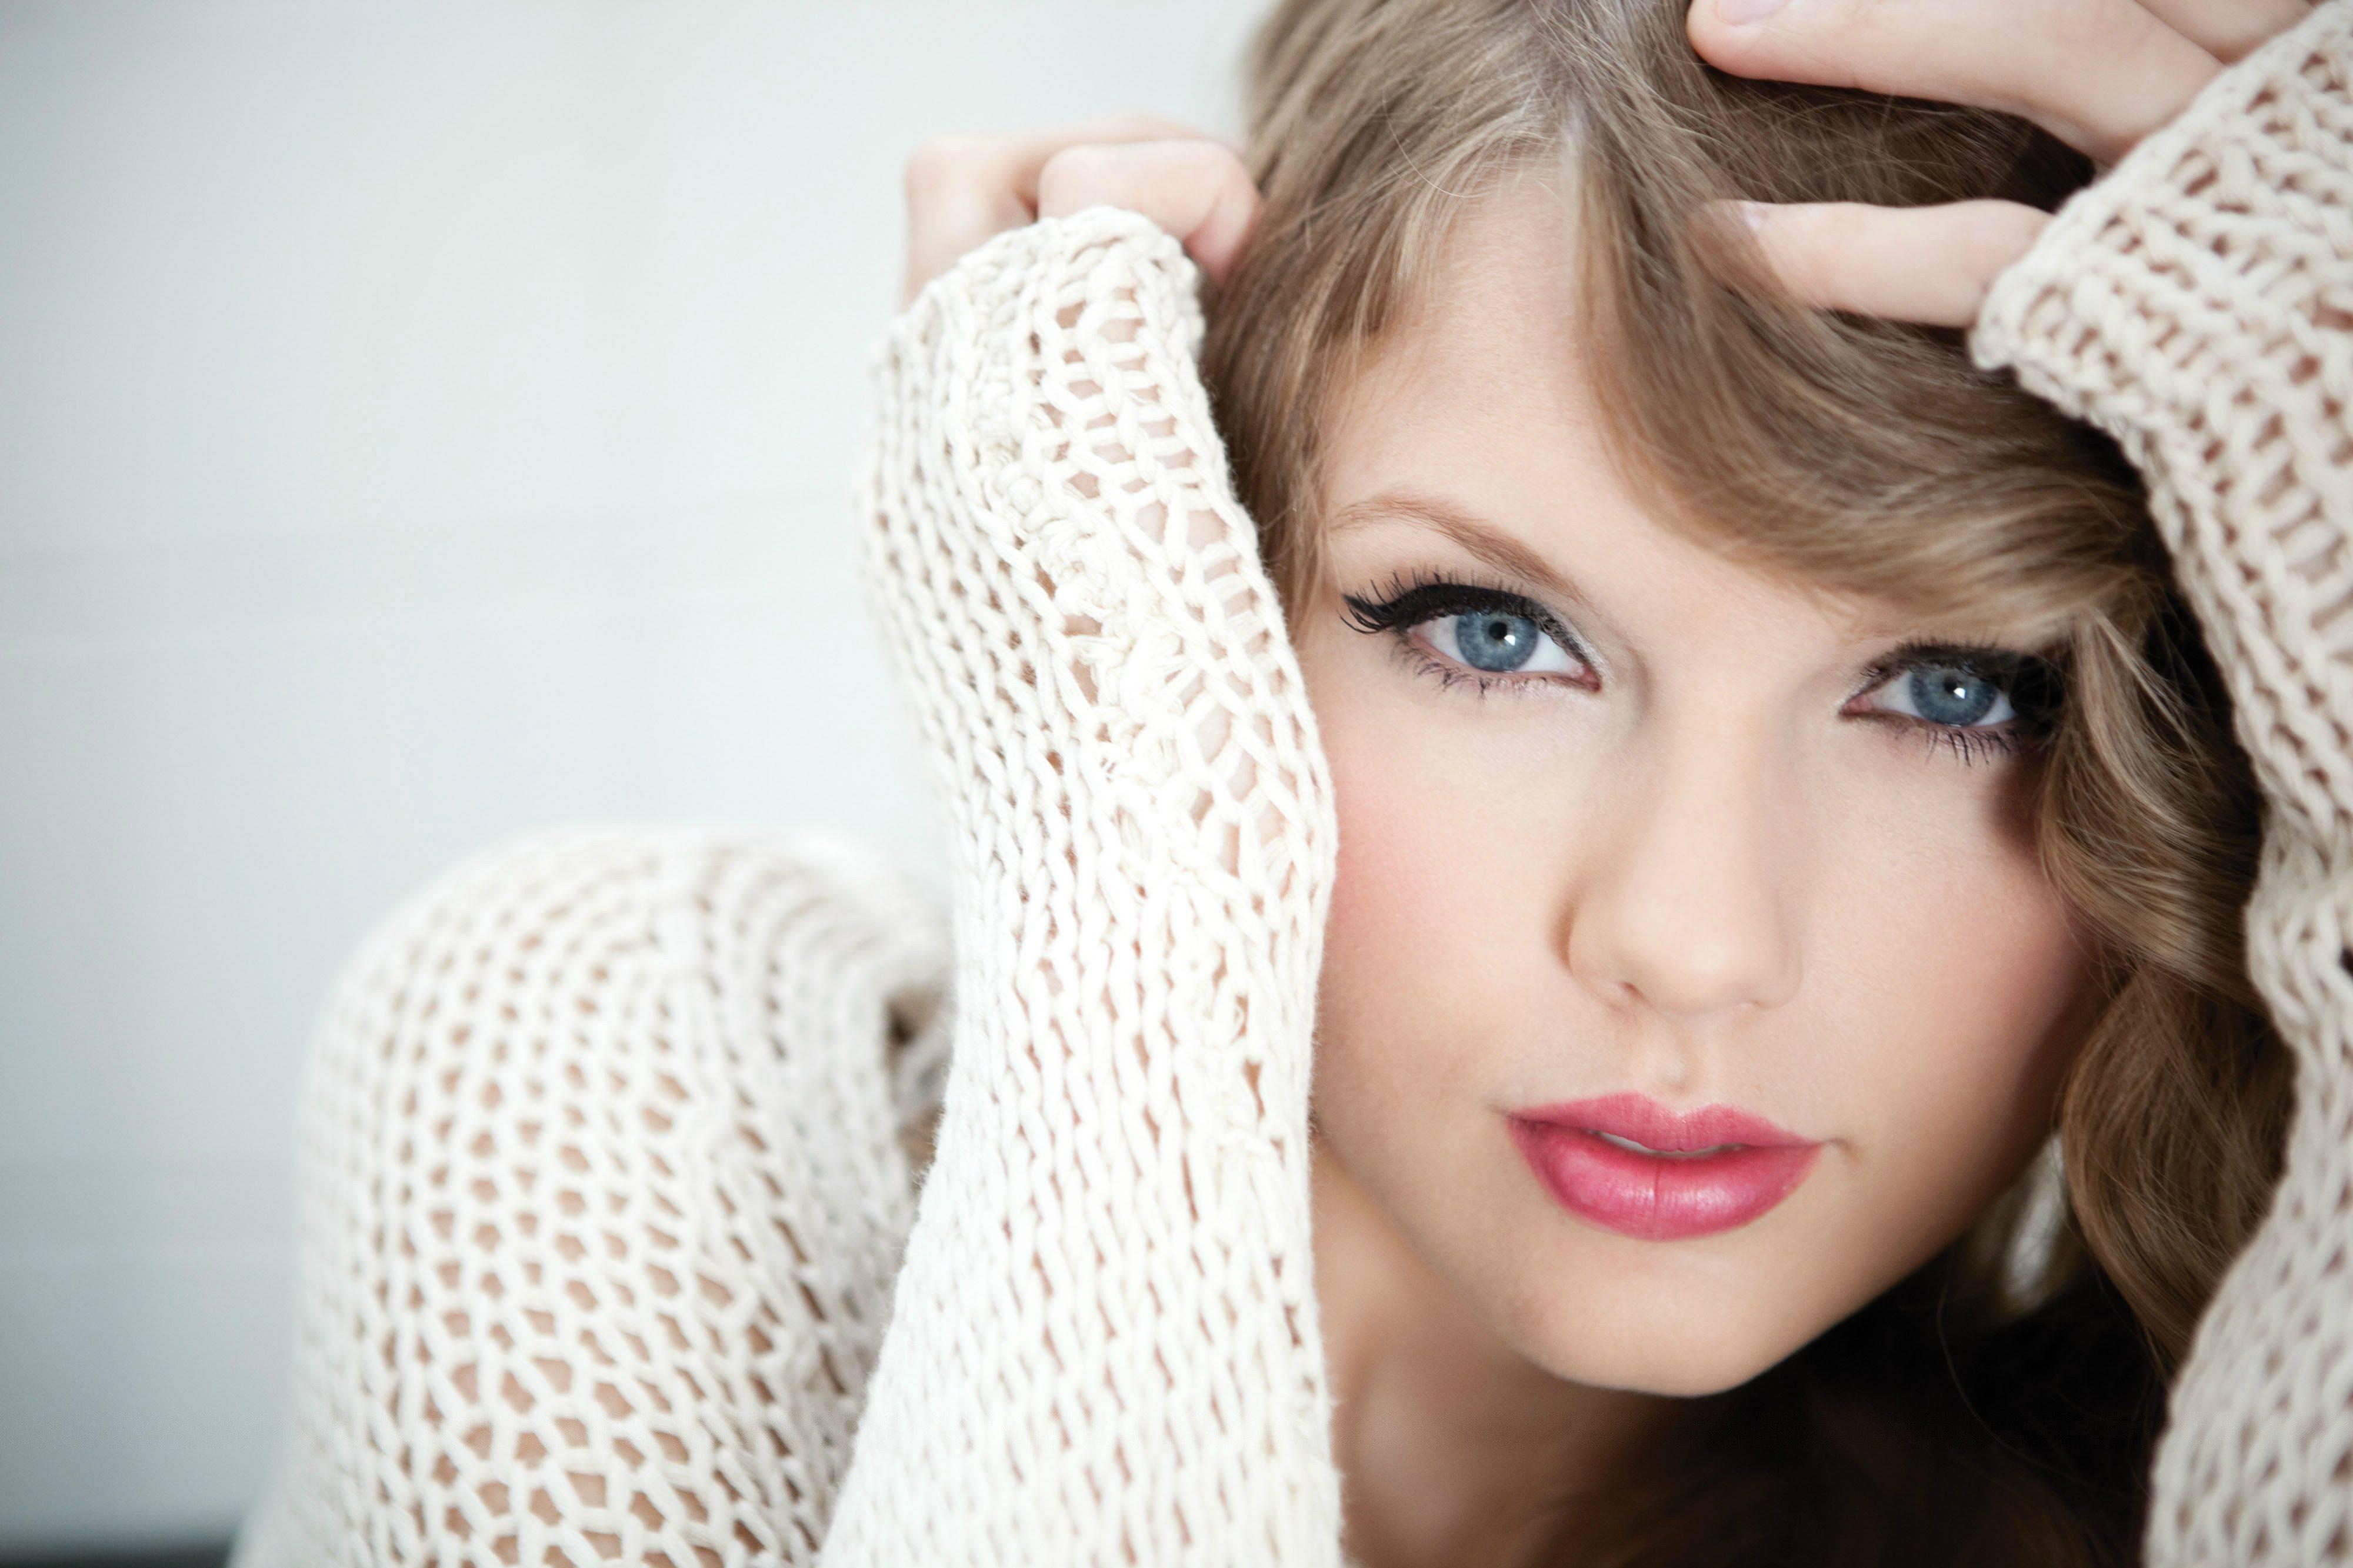 Music Taylor Swift 4k Ultra HD Wallpaper